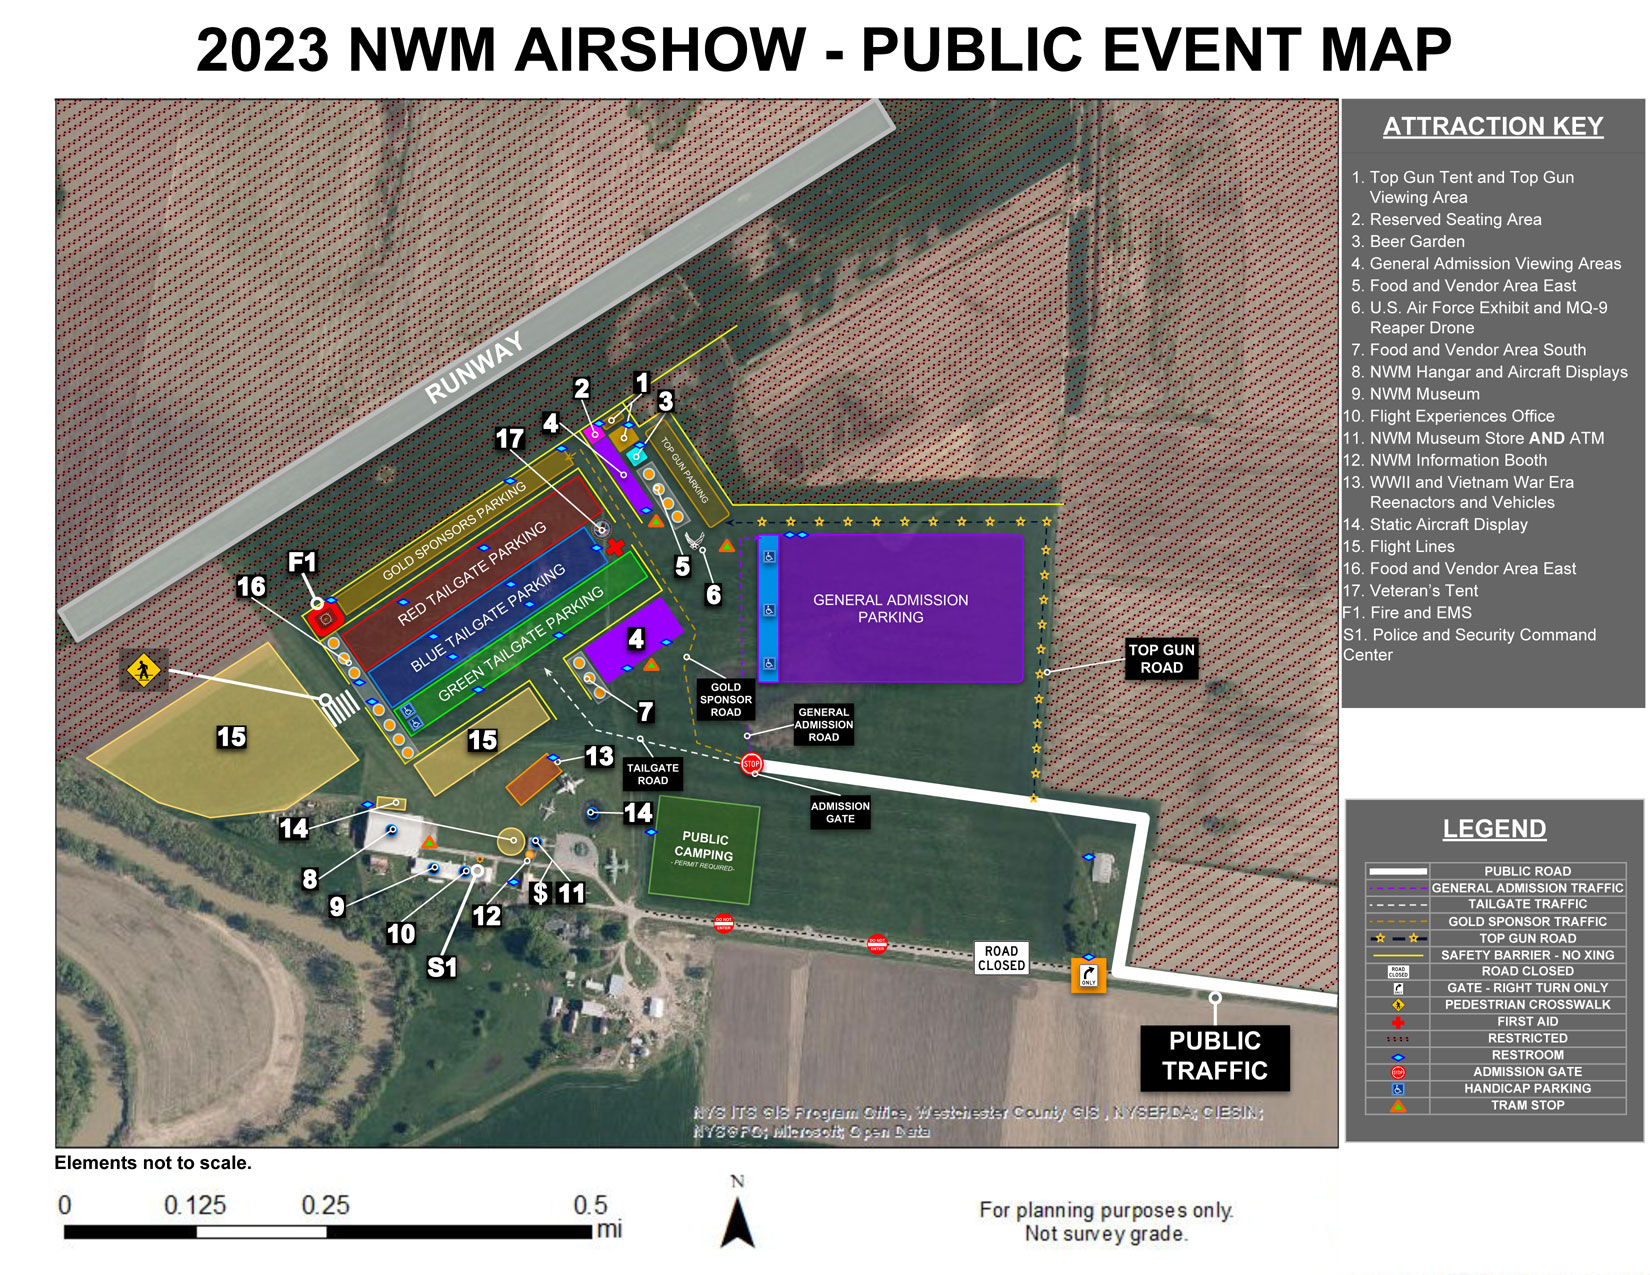 2023 NWM Airshow Map